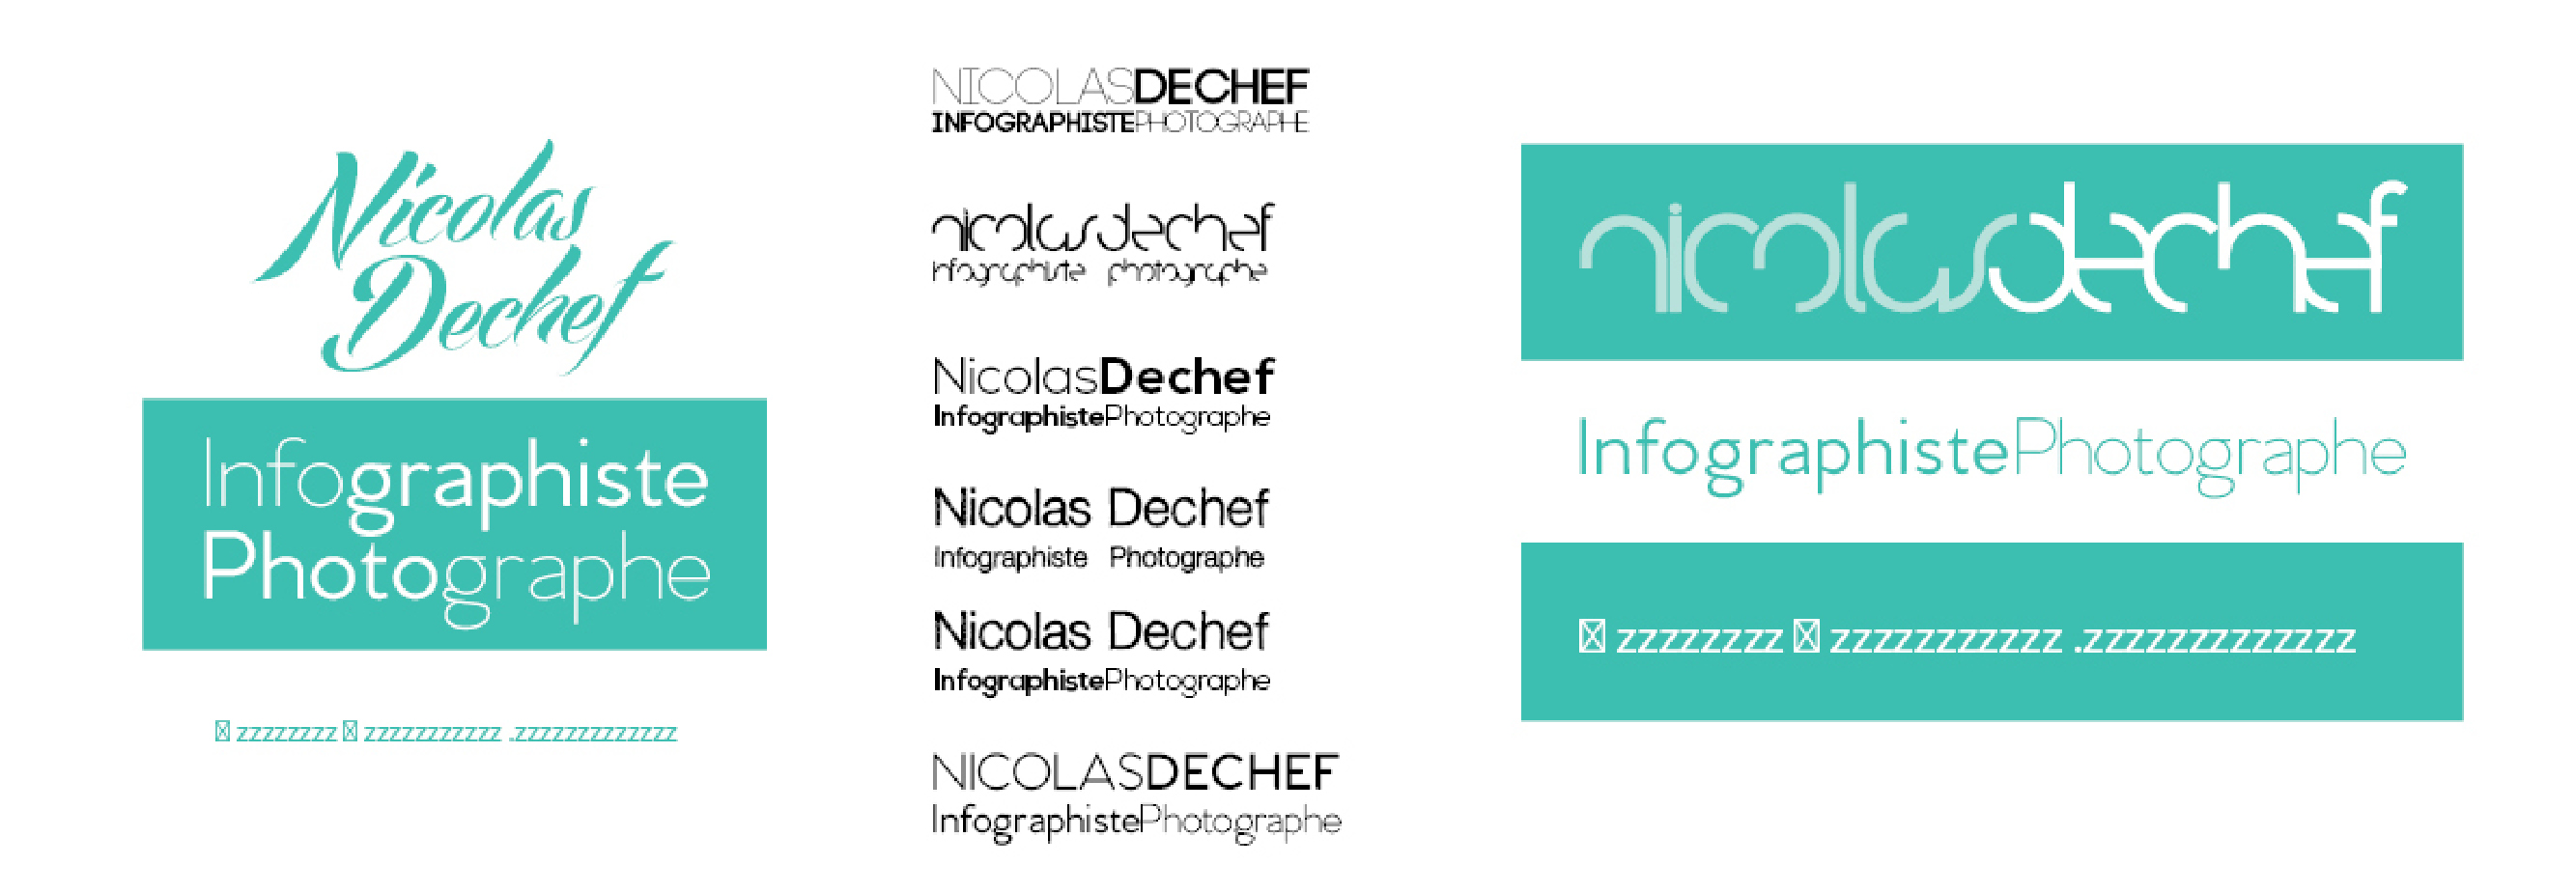 Recherche logo 02, nicolas dechef, infographiste & photographe, Charleroi & Namur (Walcourt)